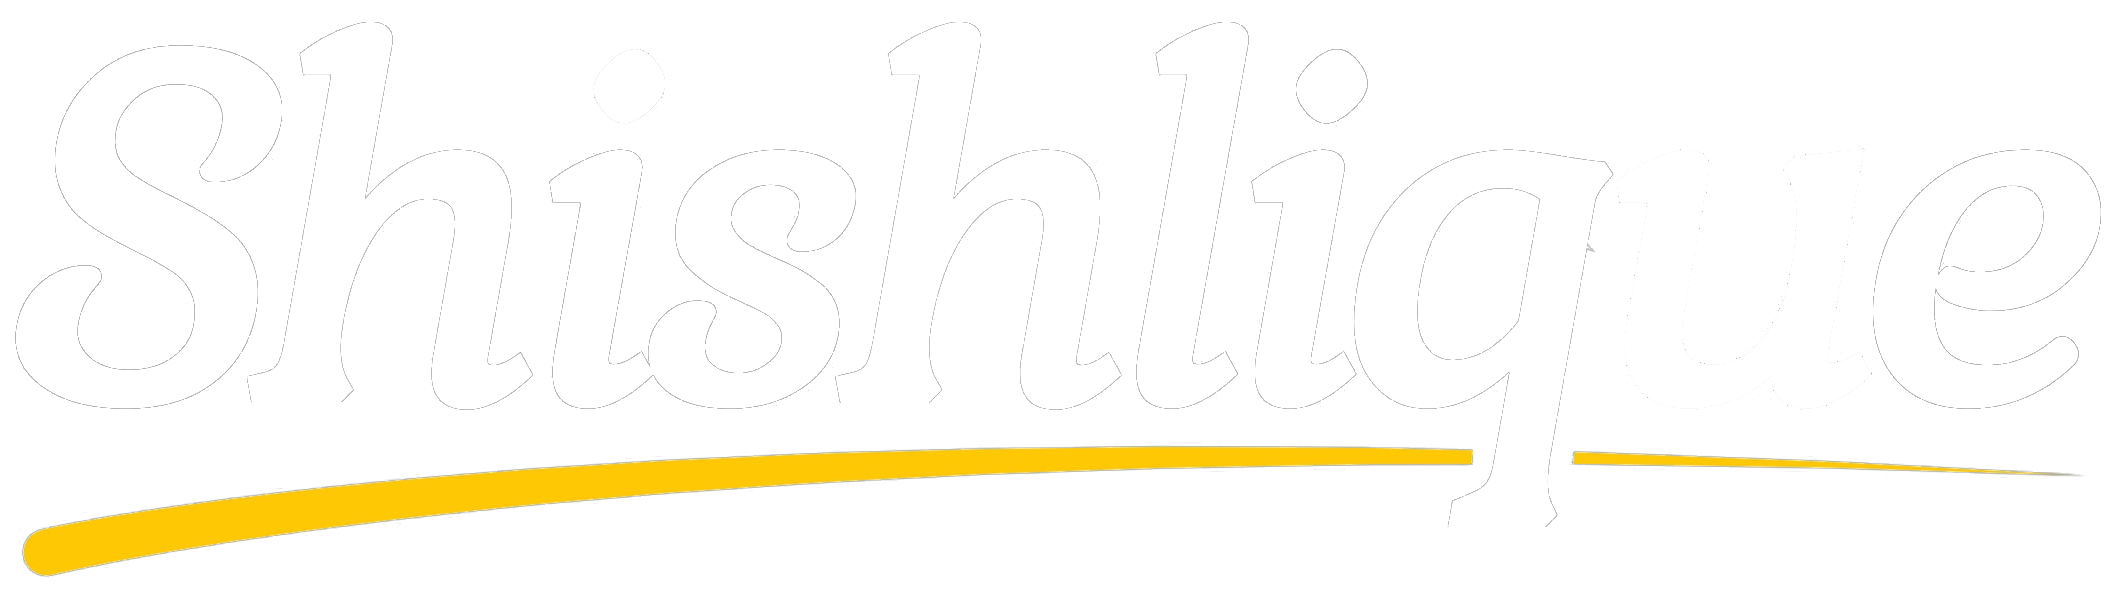 Shishlique